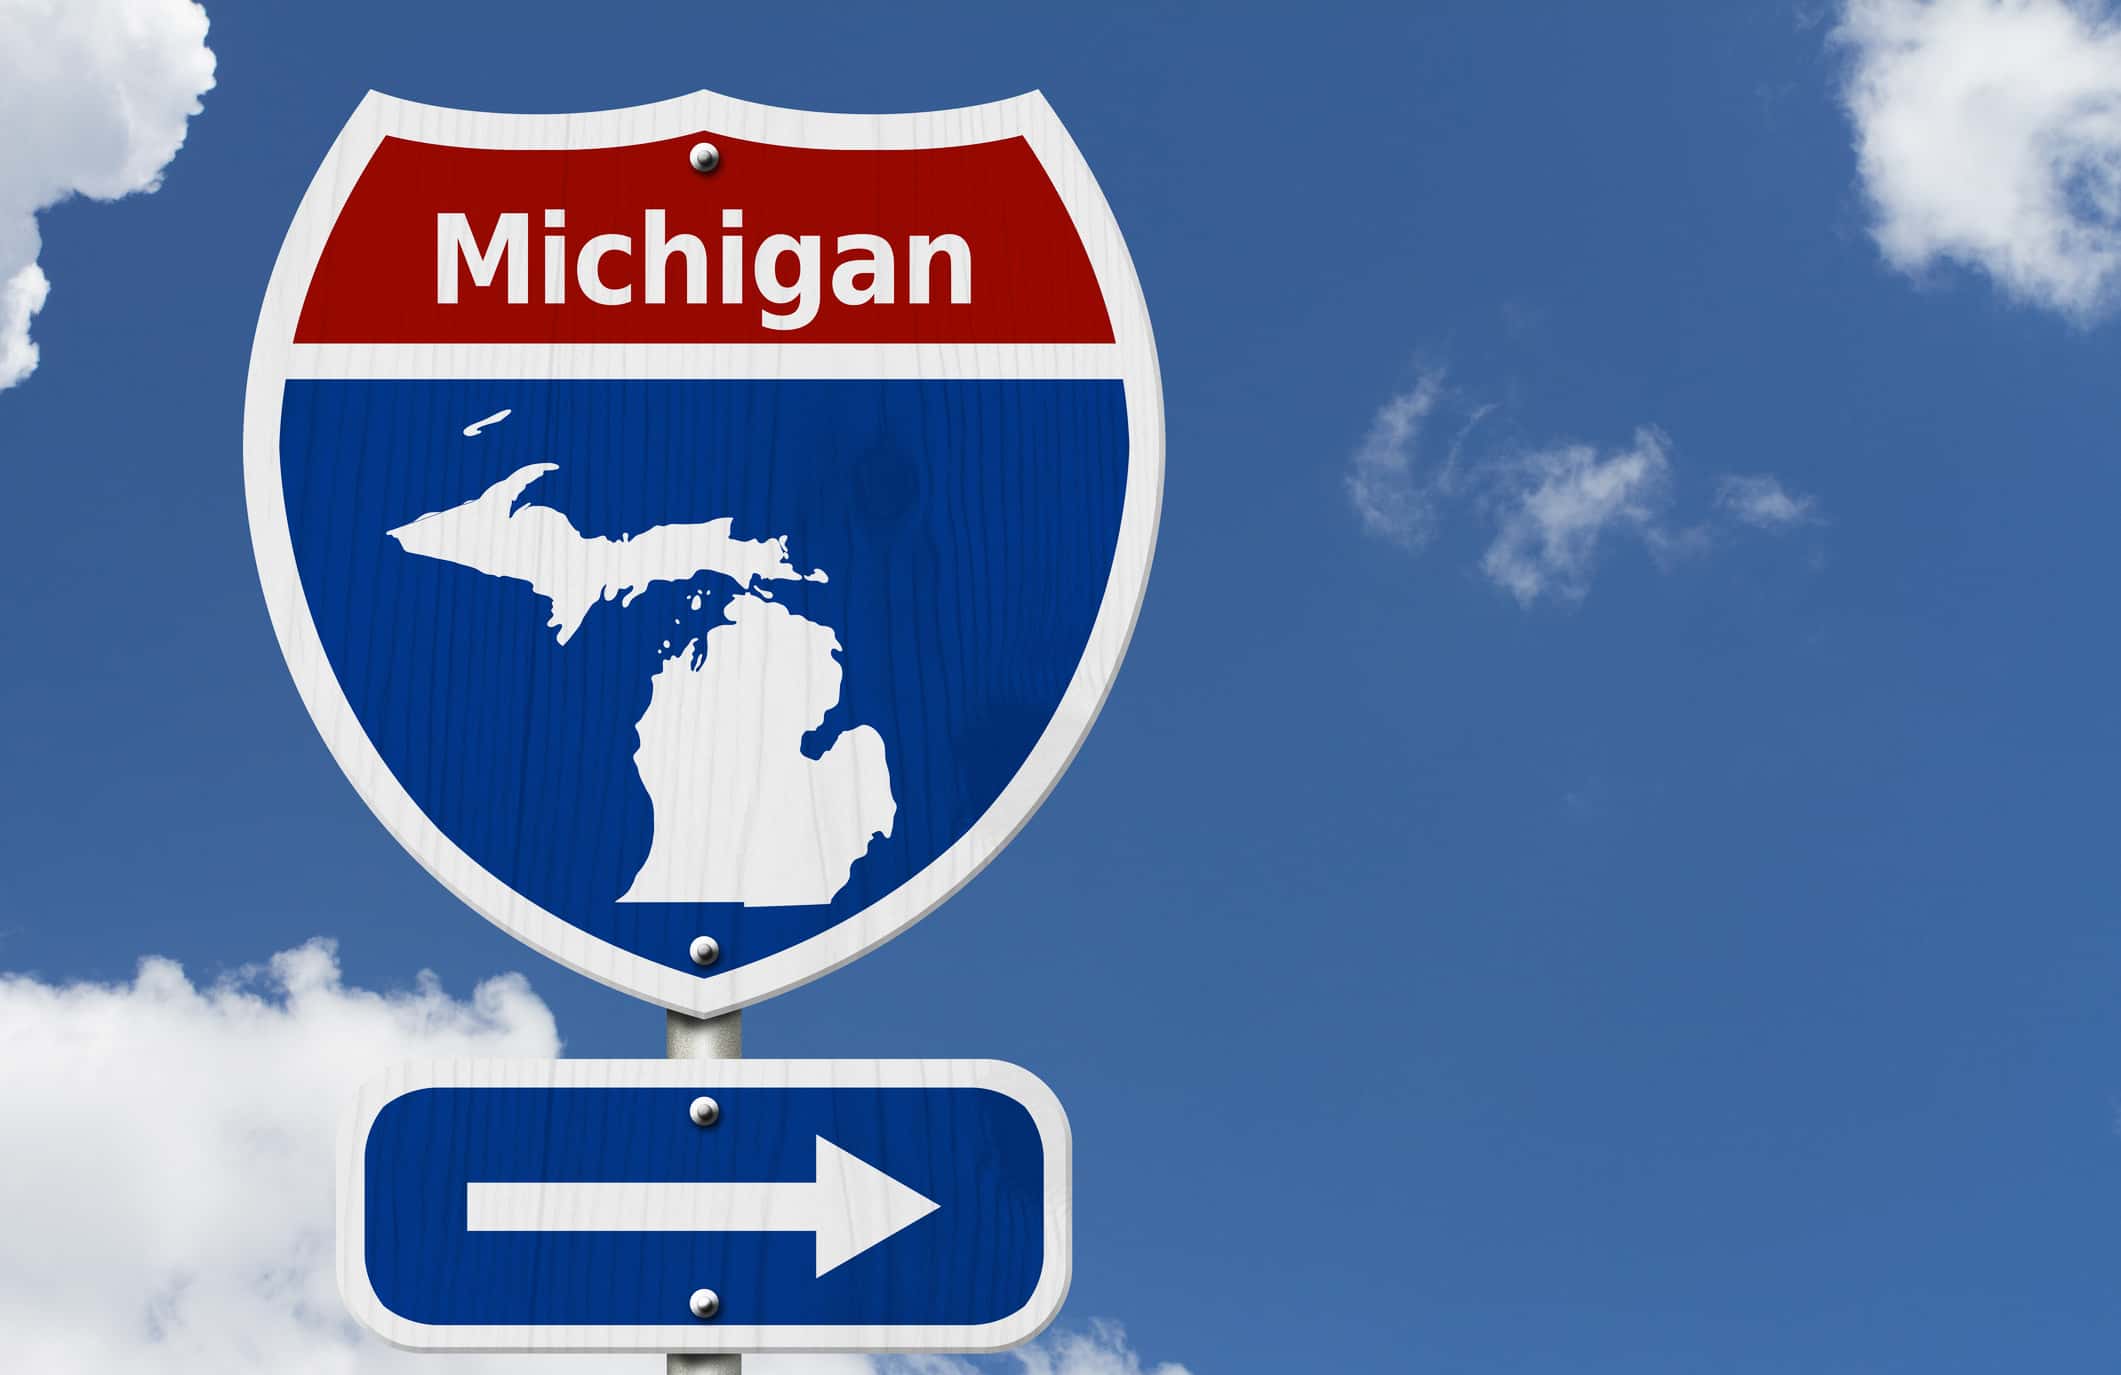 MichiganRoadSign.jpg